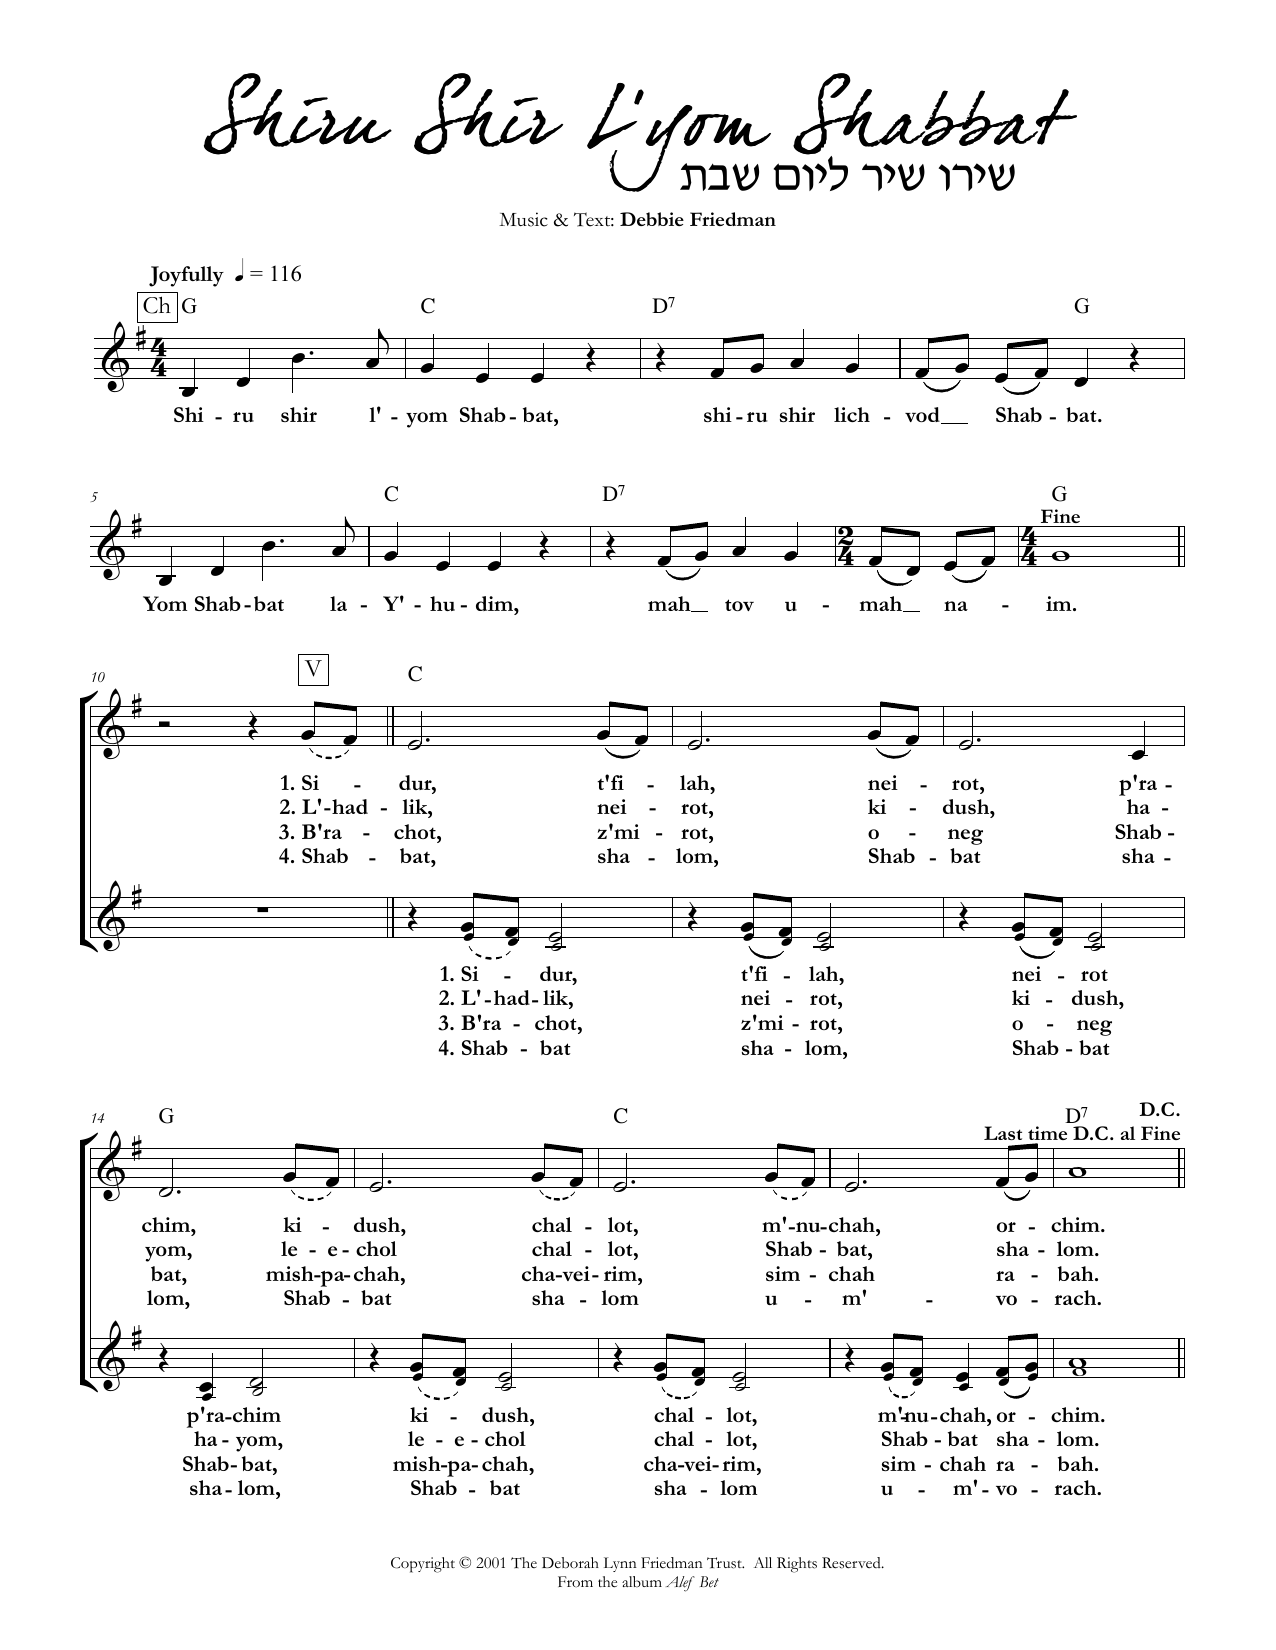 Download Debbie Friedman Shiru Shir L'yom Shabbat Sheet Music and learn how to play Lead Sheet / Fake Book PDF digital score in minutes